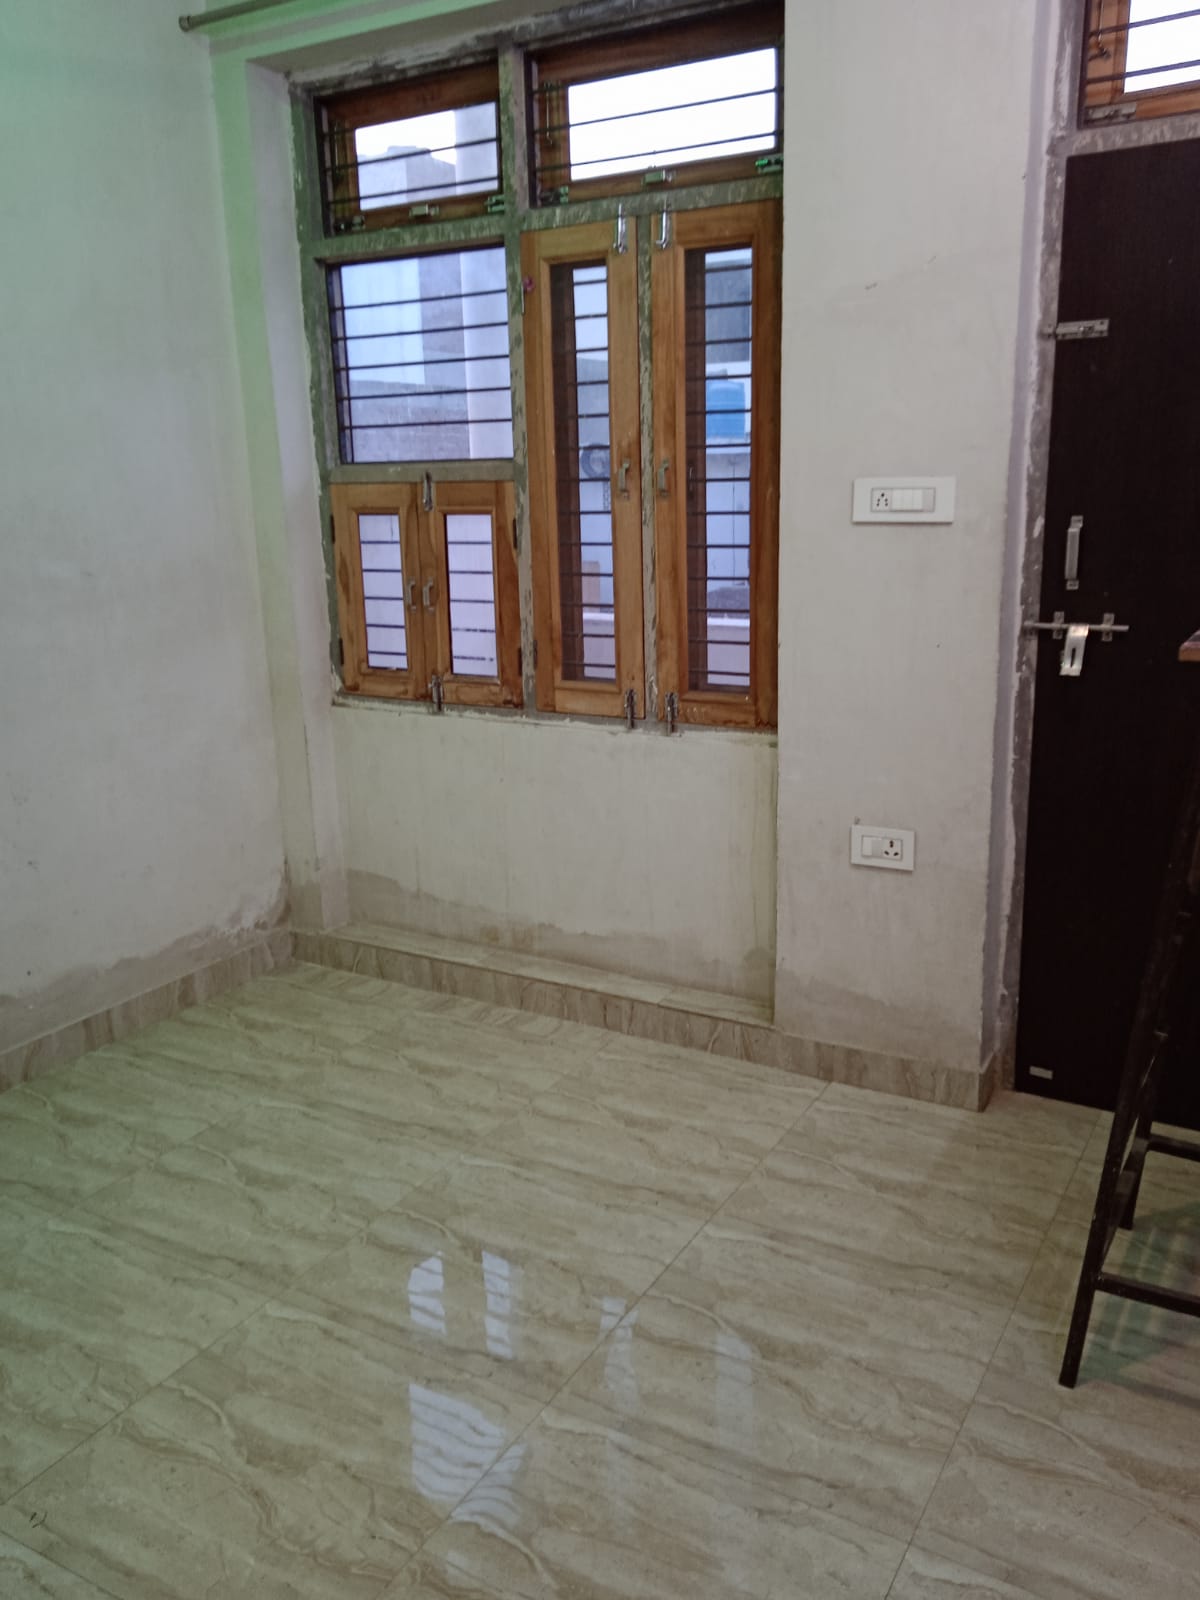 2 room set house in Malviya Nagar on JLN Marg